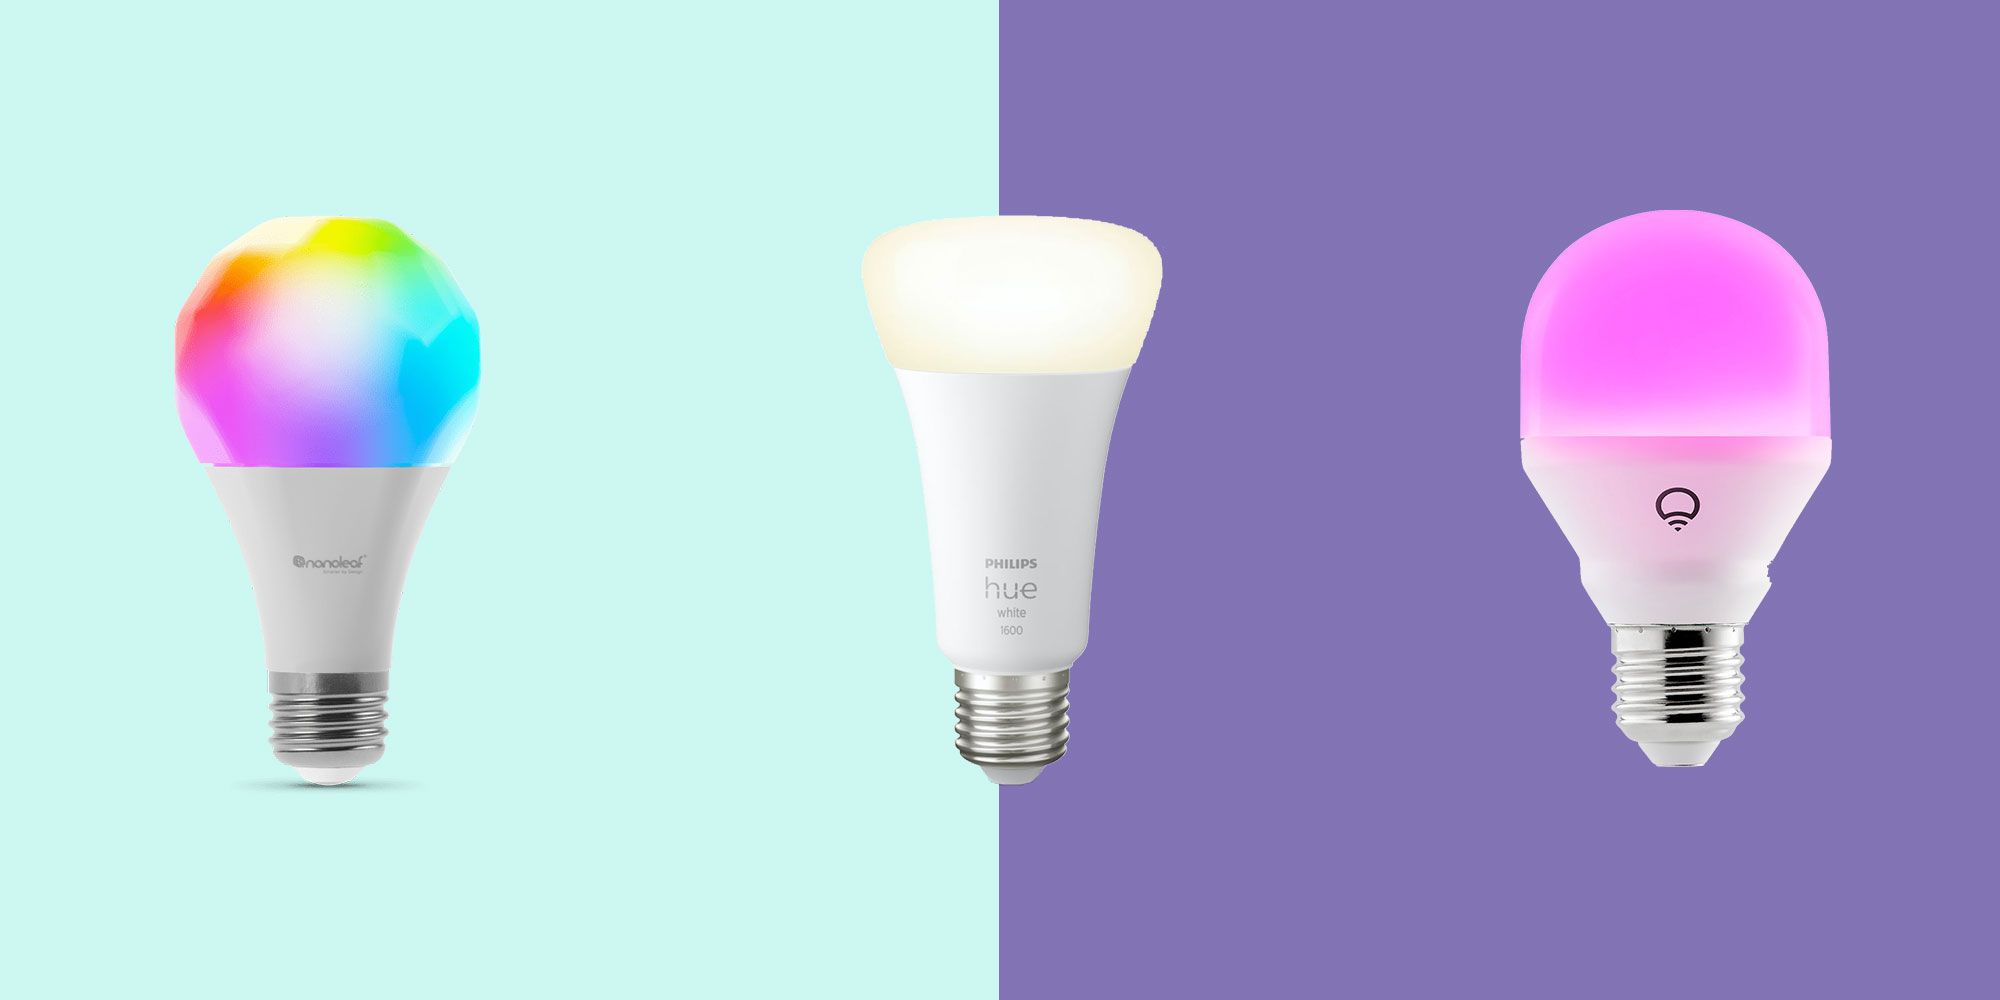 How Do The Smart Light Bulbs Work